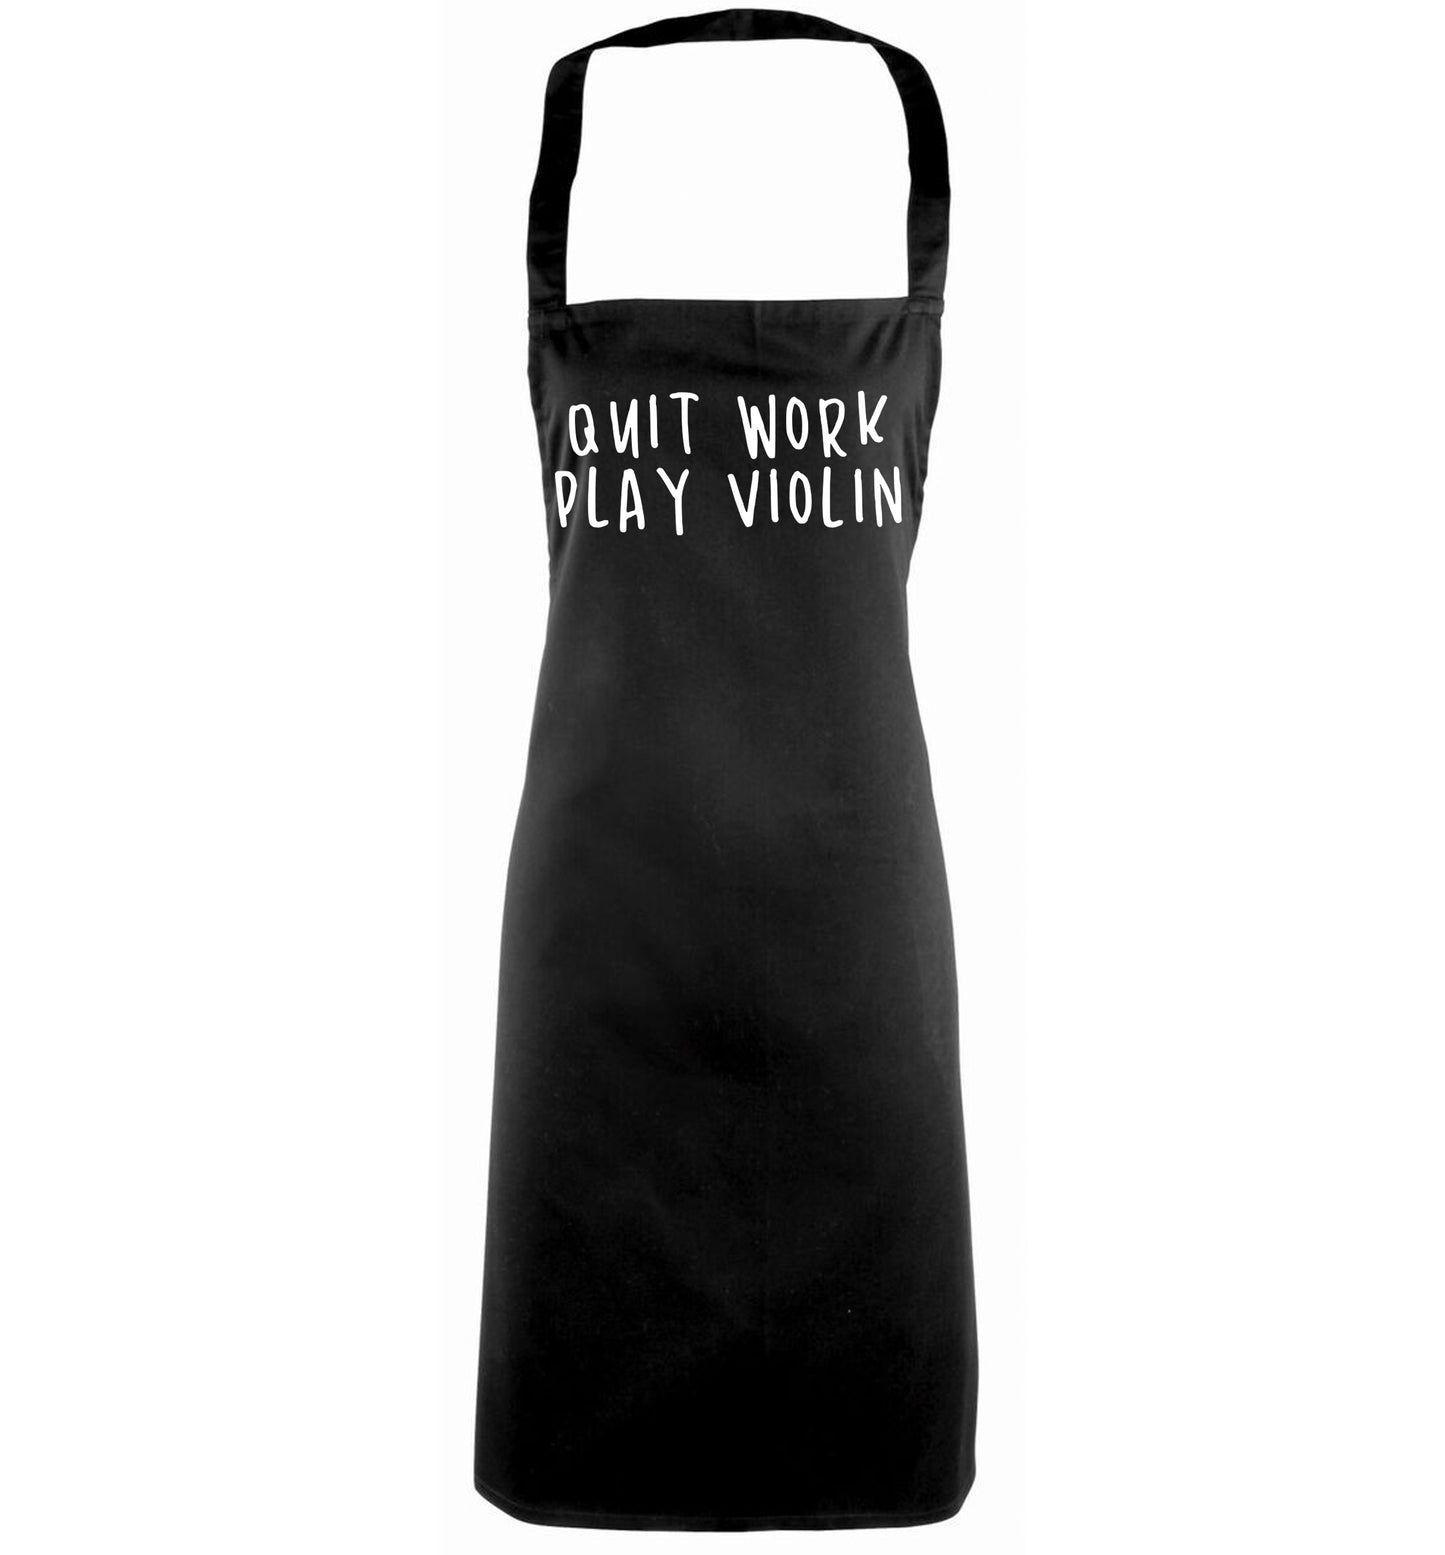 Quit work play violin black apron